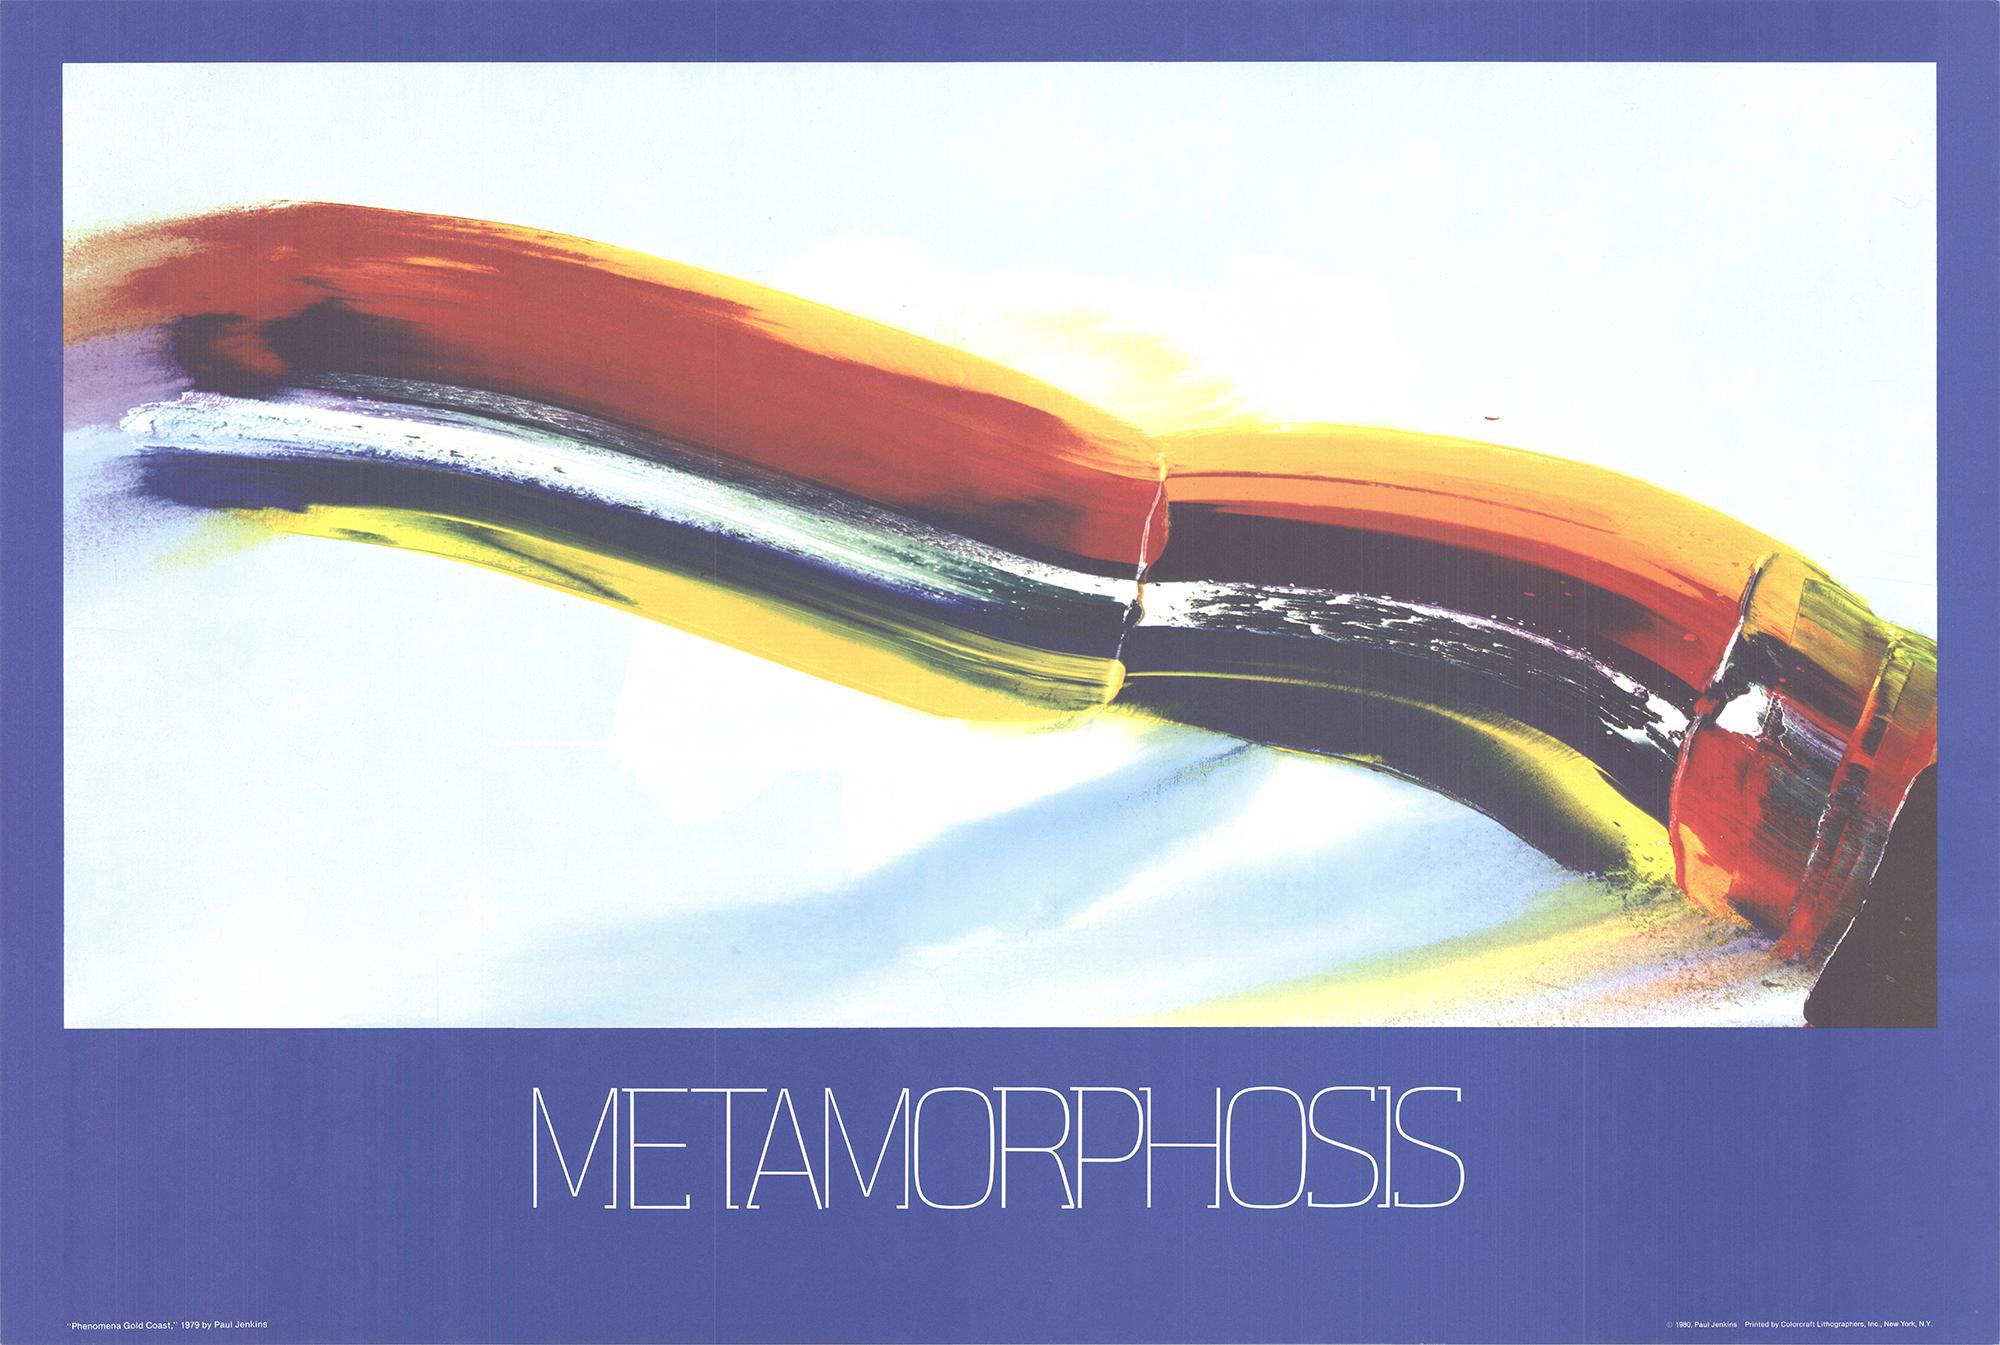 Paul Jenkins-Phenomena Gold Coast-21.5" x 32"-Offset Lithograph-1975-Abstract
